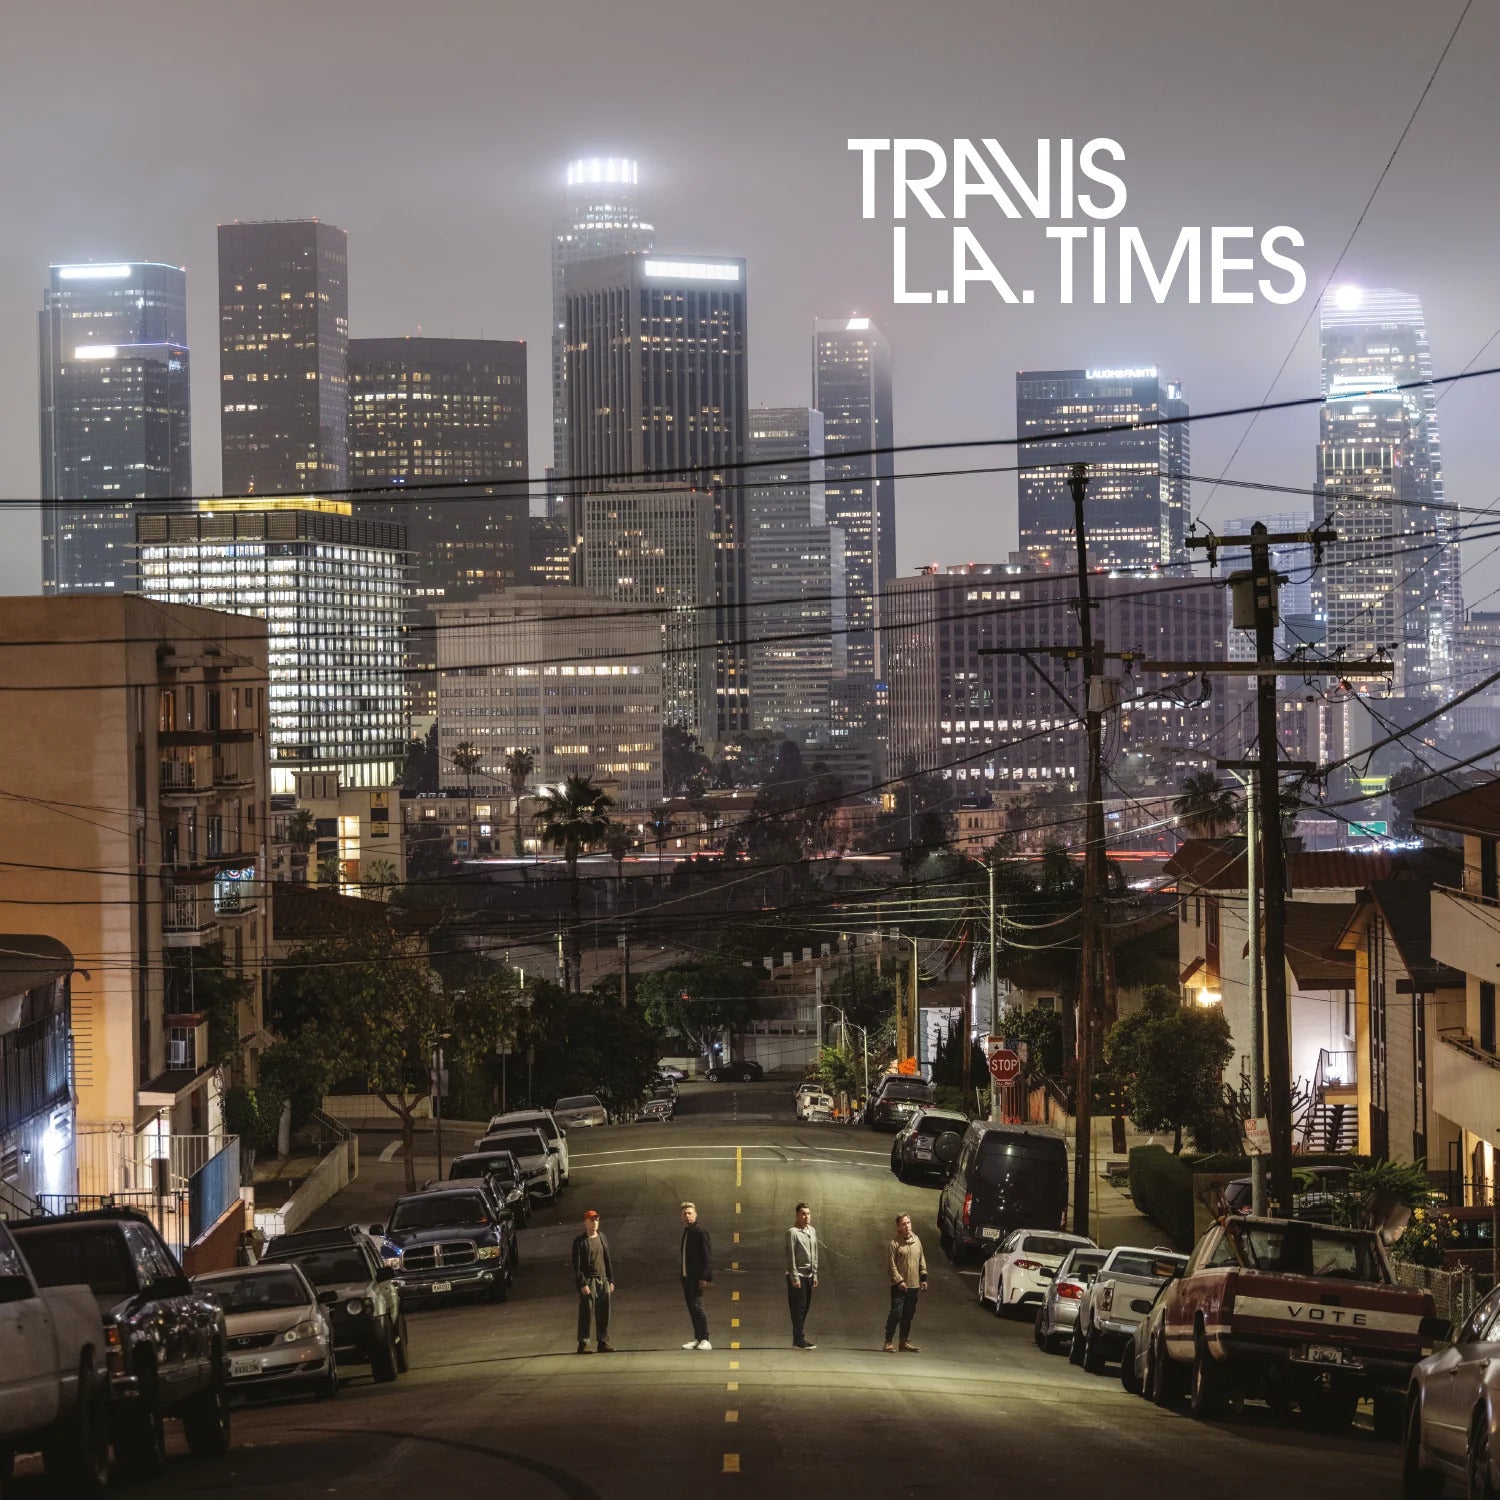 L.A. Times: Vinyl LP